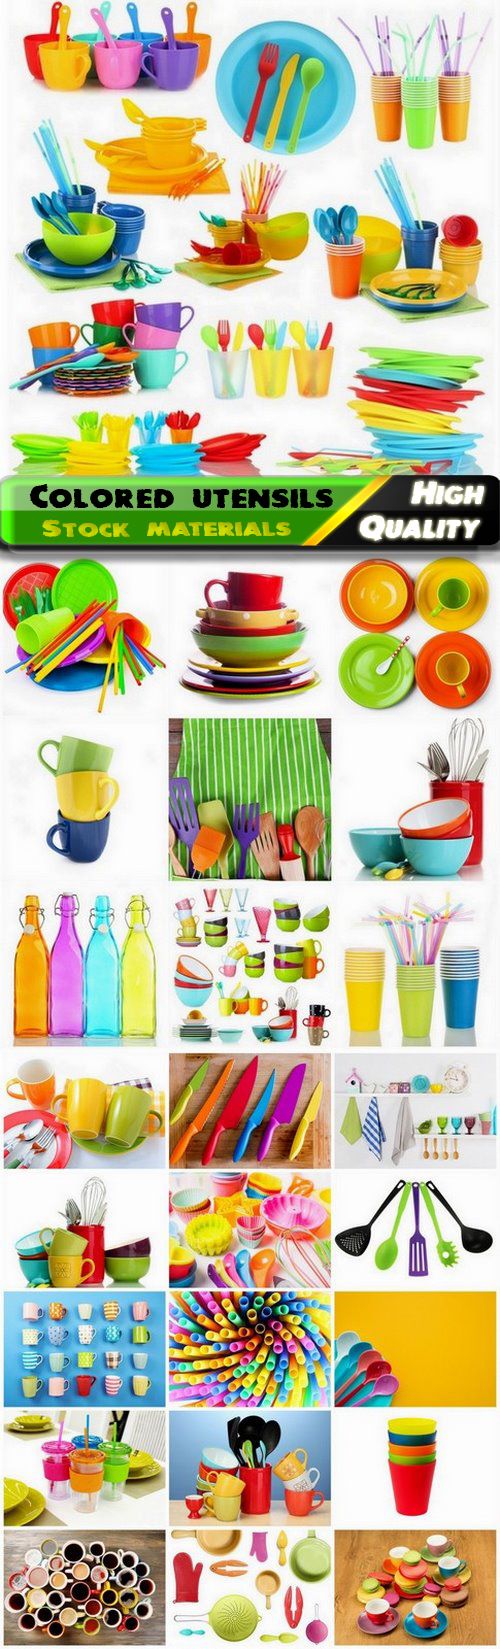 Colored utensils for kitchen - 25 HQ Jpg